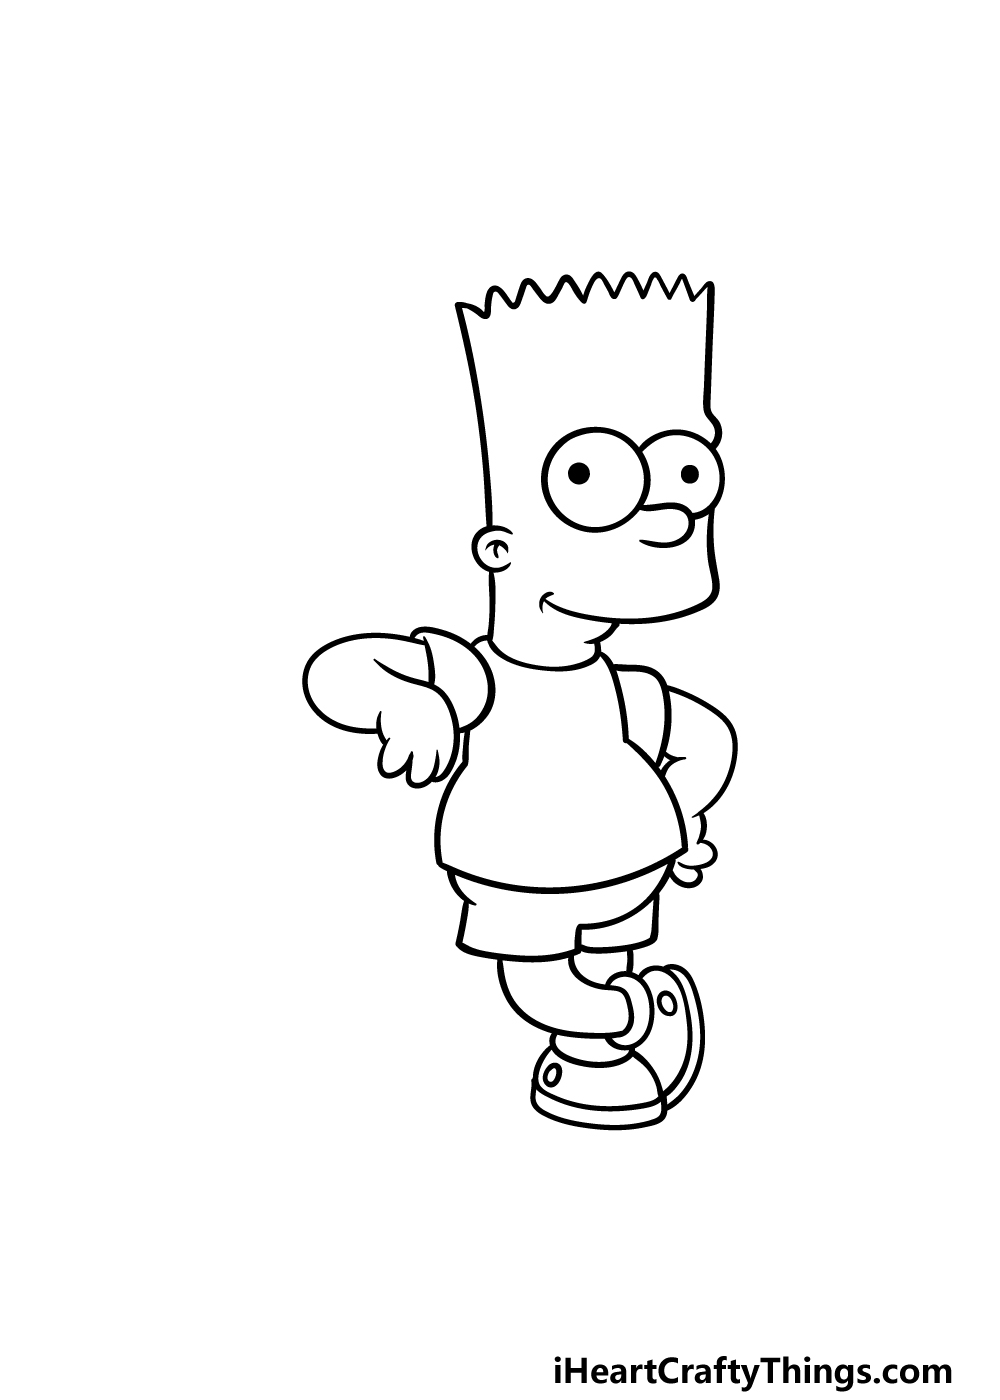 Барт рисунок карандашом дэдэнсайд